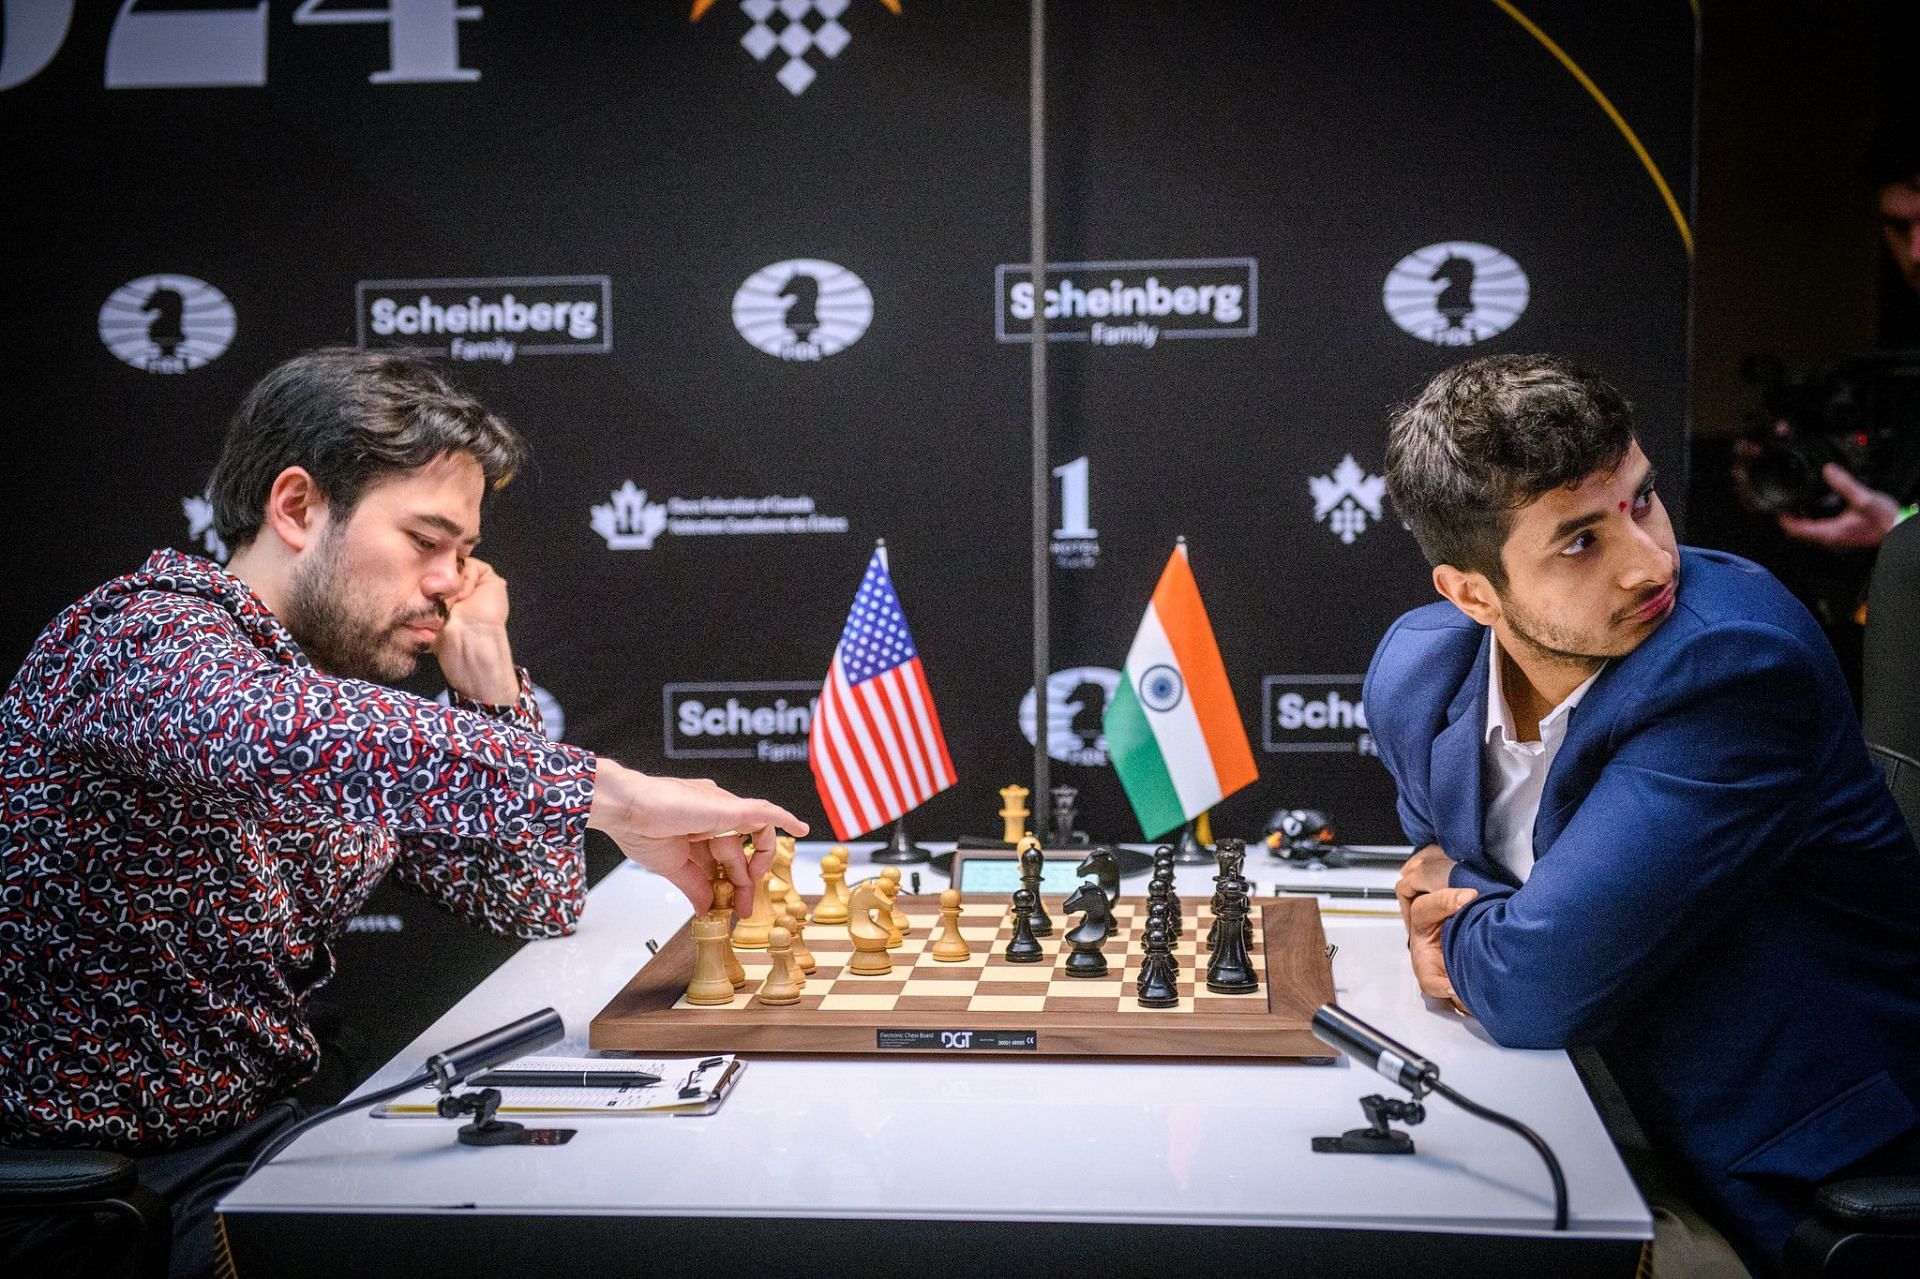 Image Courtesy: Michal Walusza via FIDE_chess on X